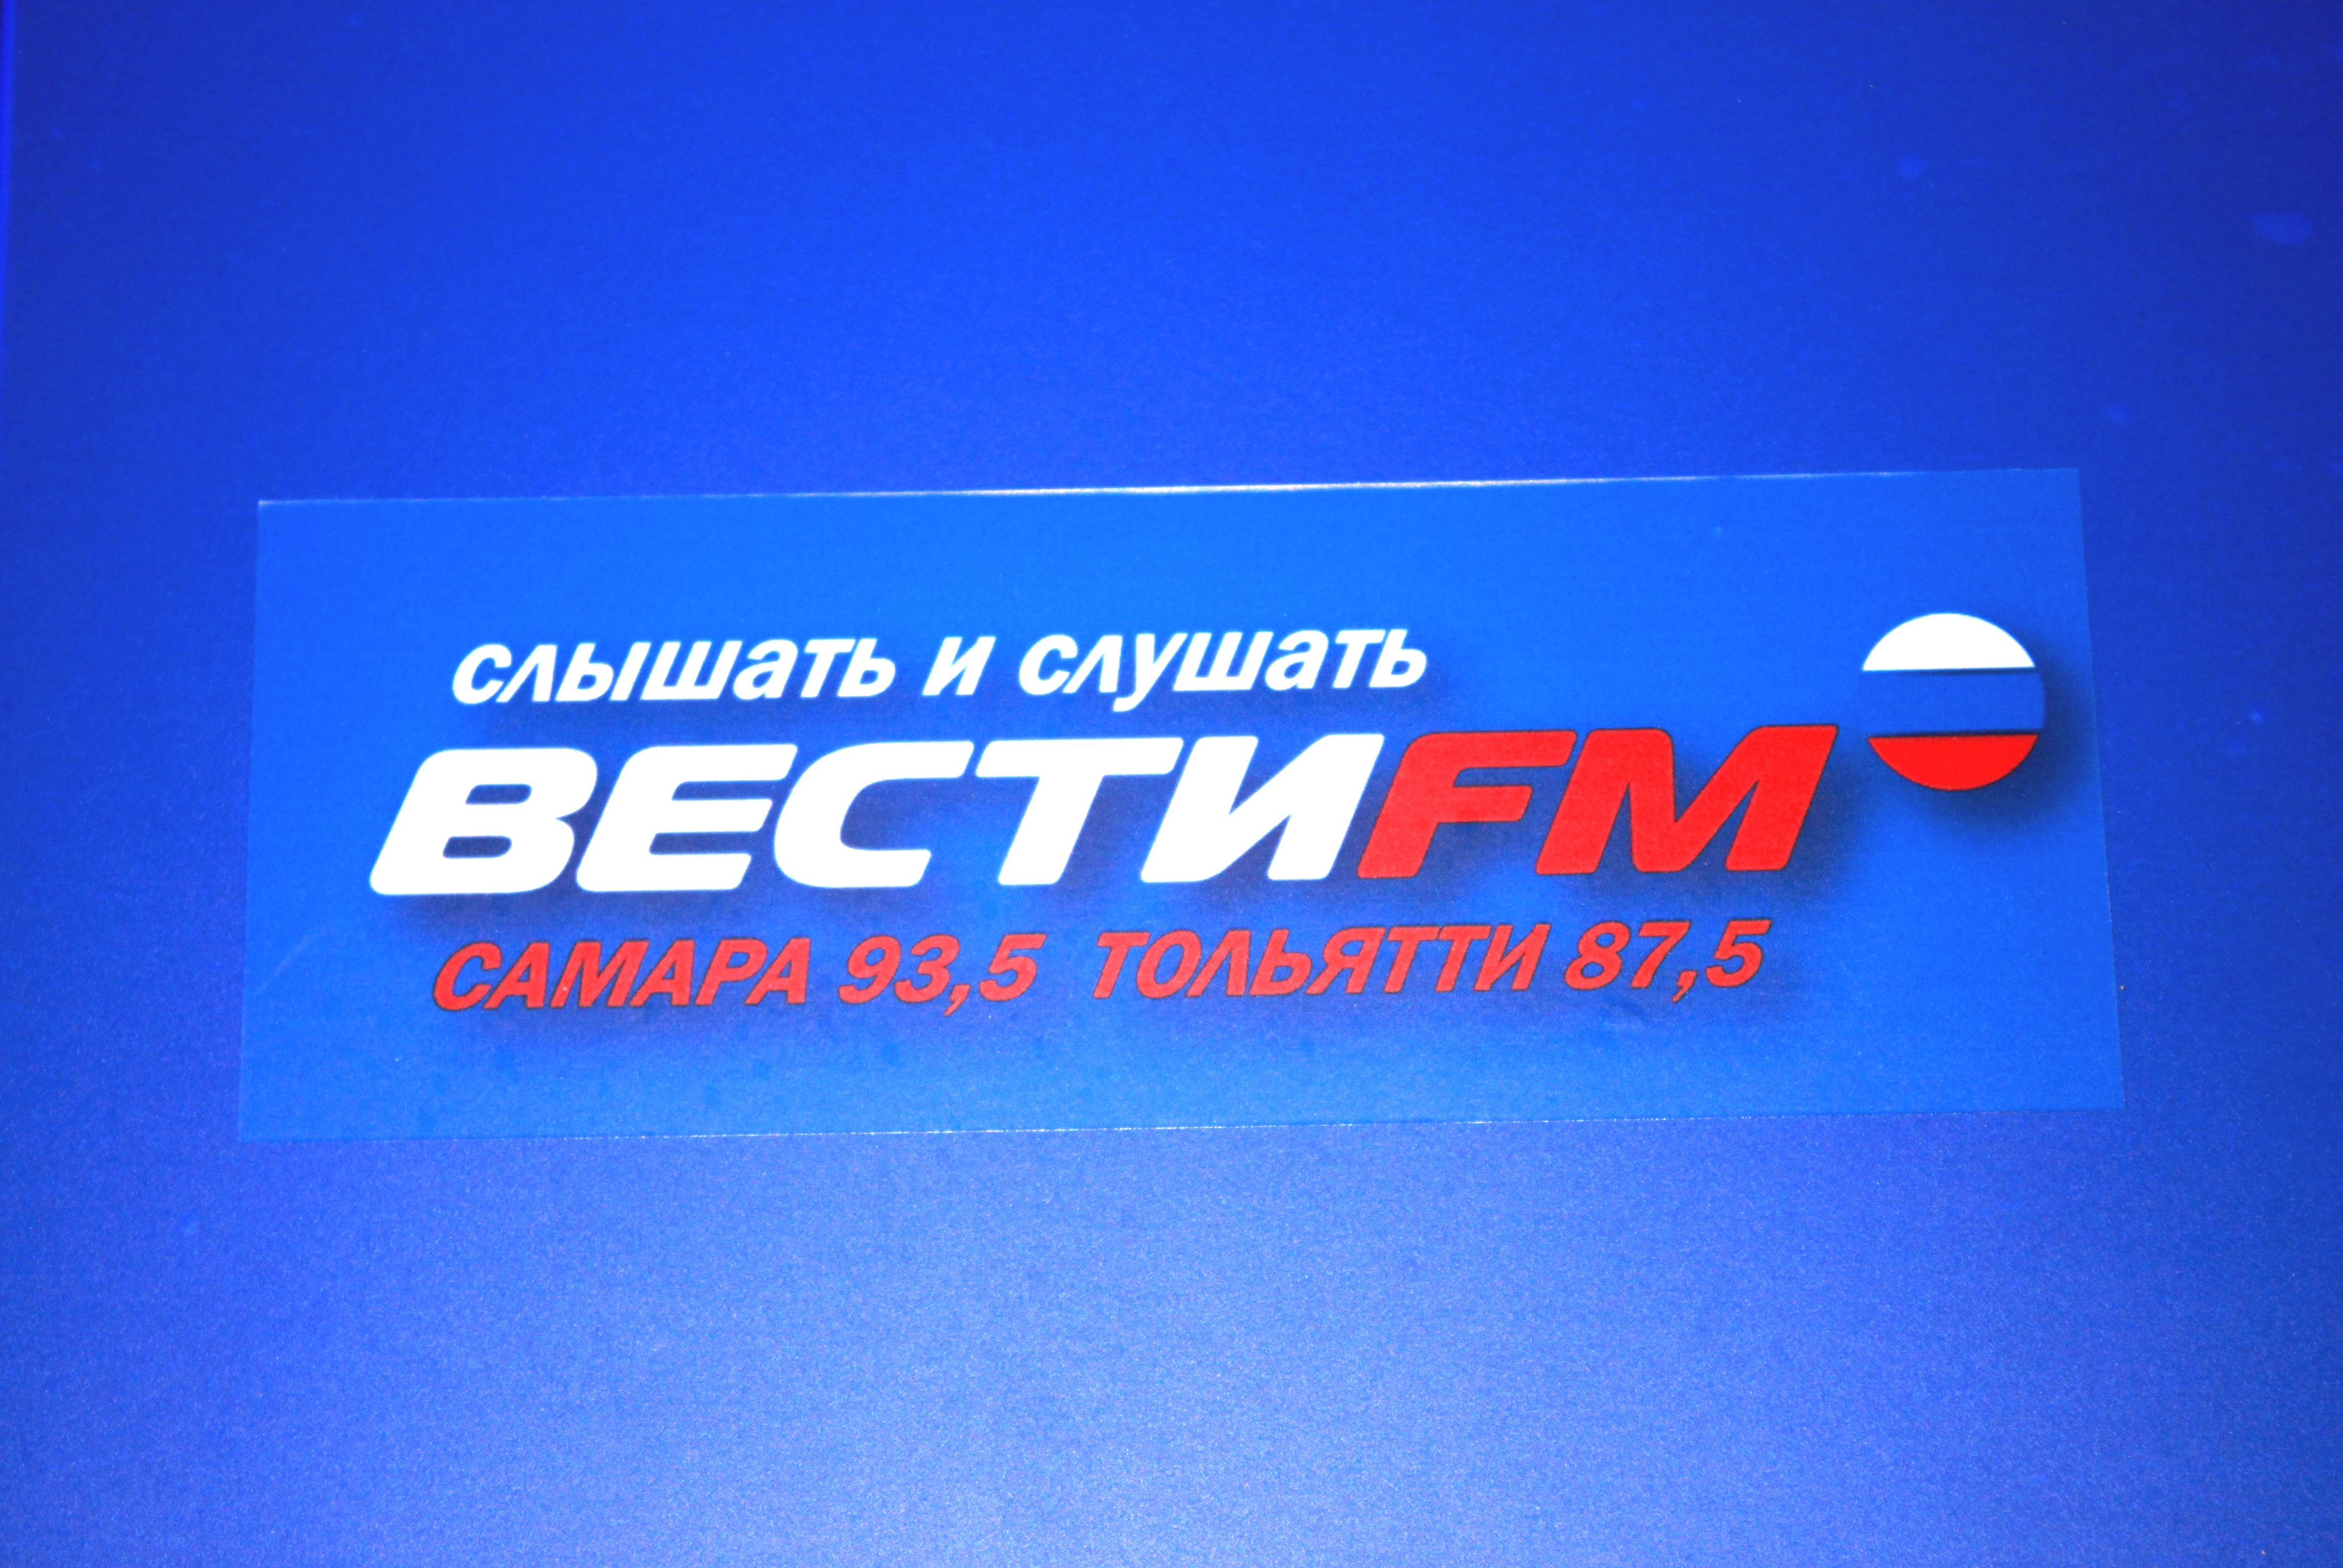 Радио вести фм прямой эфир трансляцию. Вести ФМ. Вести fm логотип. Логотип радиостанции вести ФМ. Вести ФМ студия.